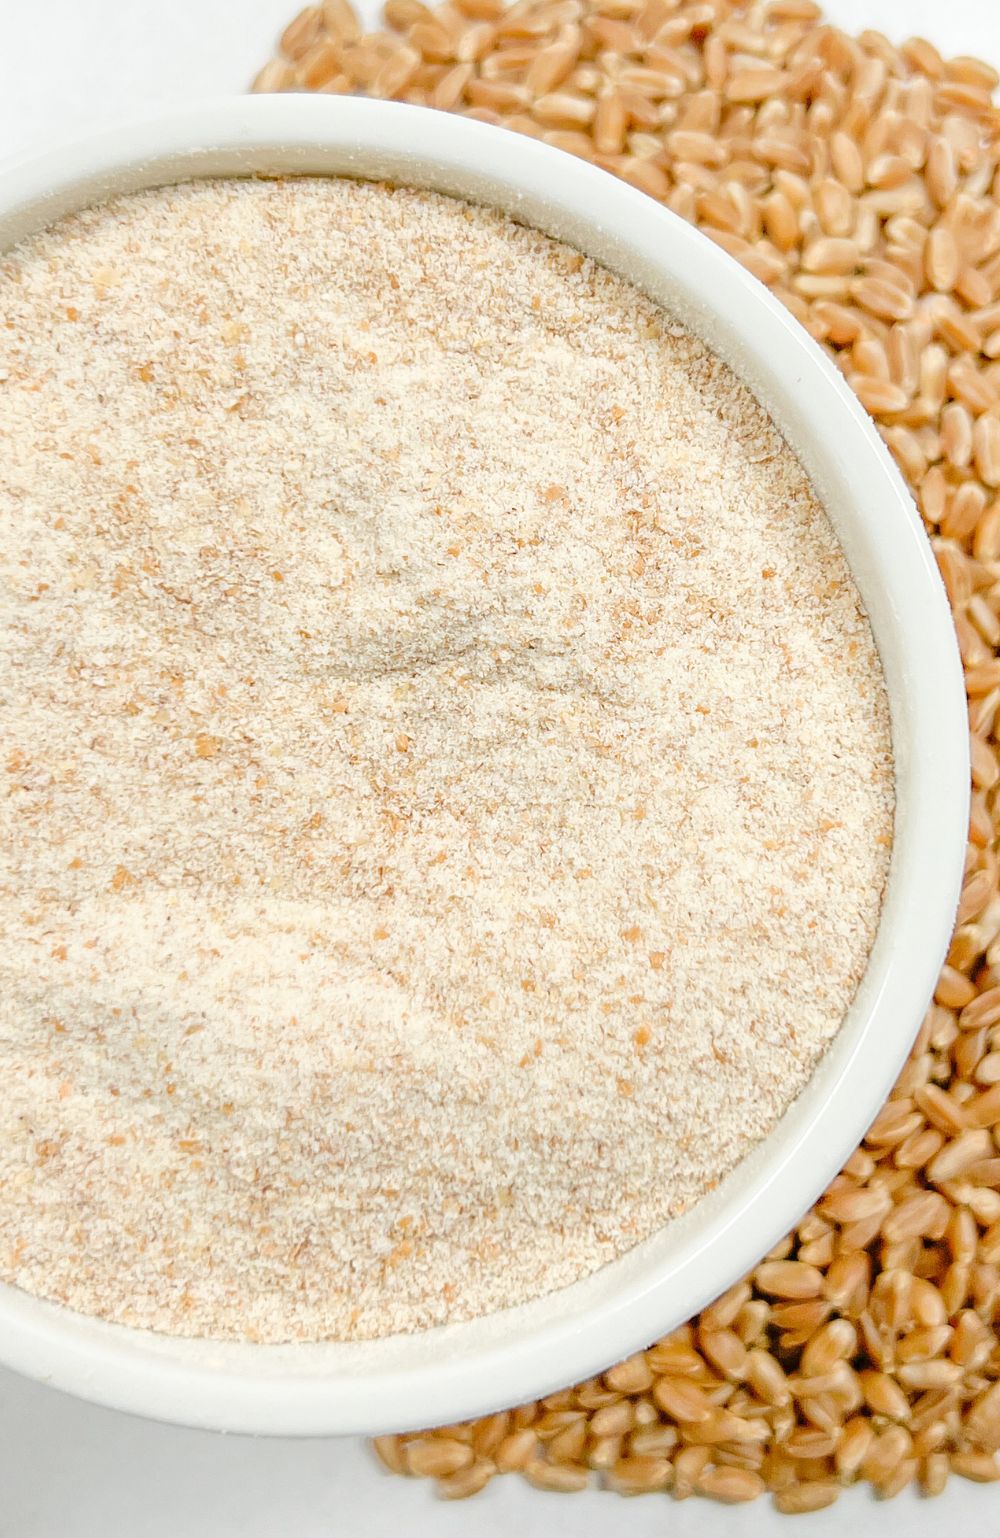 Palouse Brand Stone Ground Whole Wheat Flour, 3 LBS Re-Sealable Bag